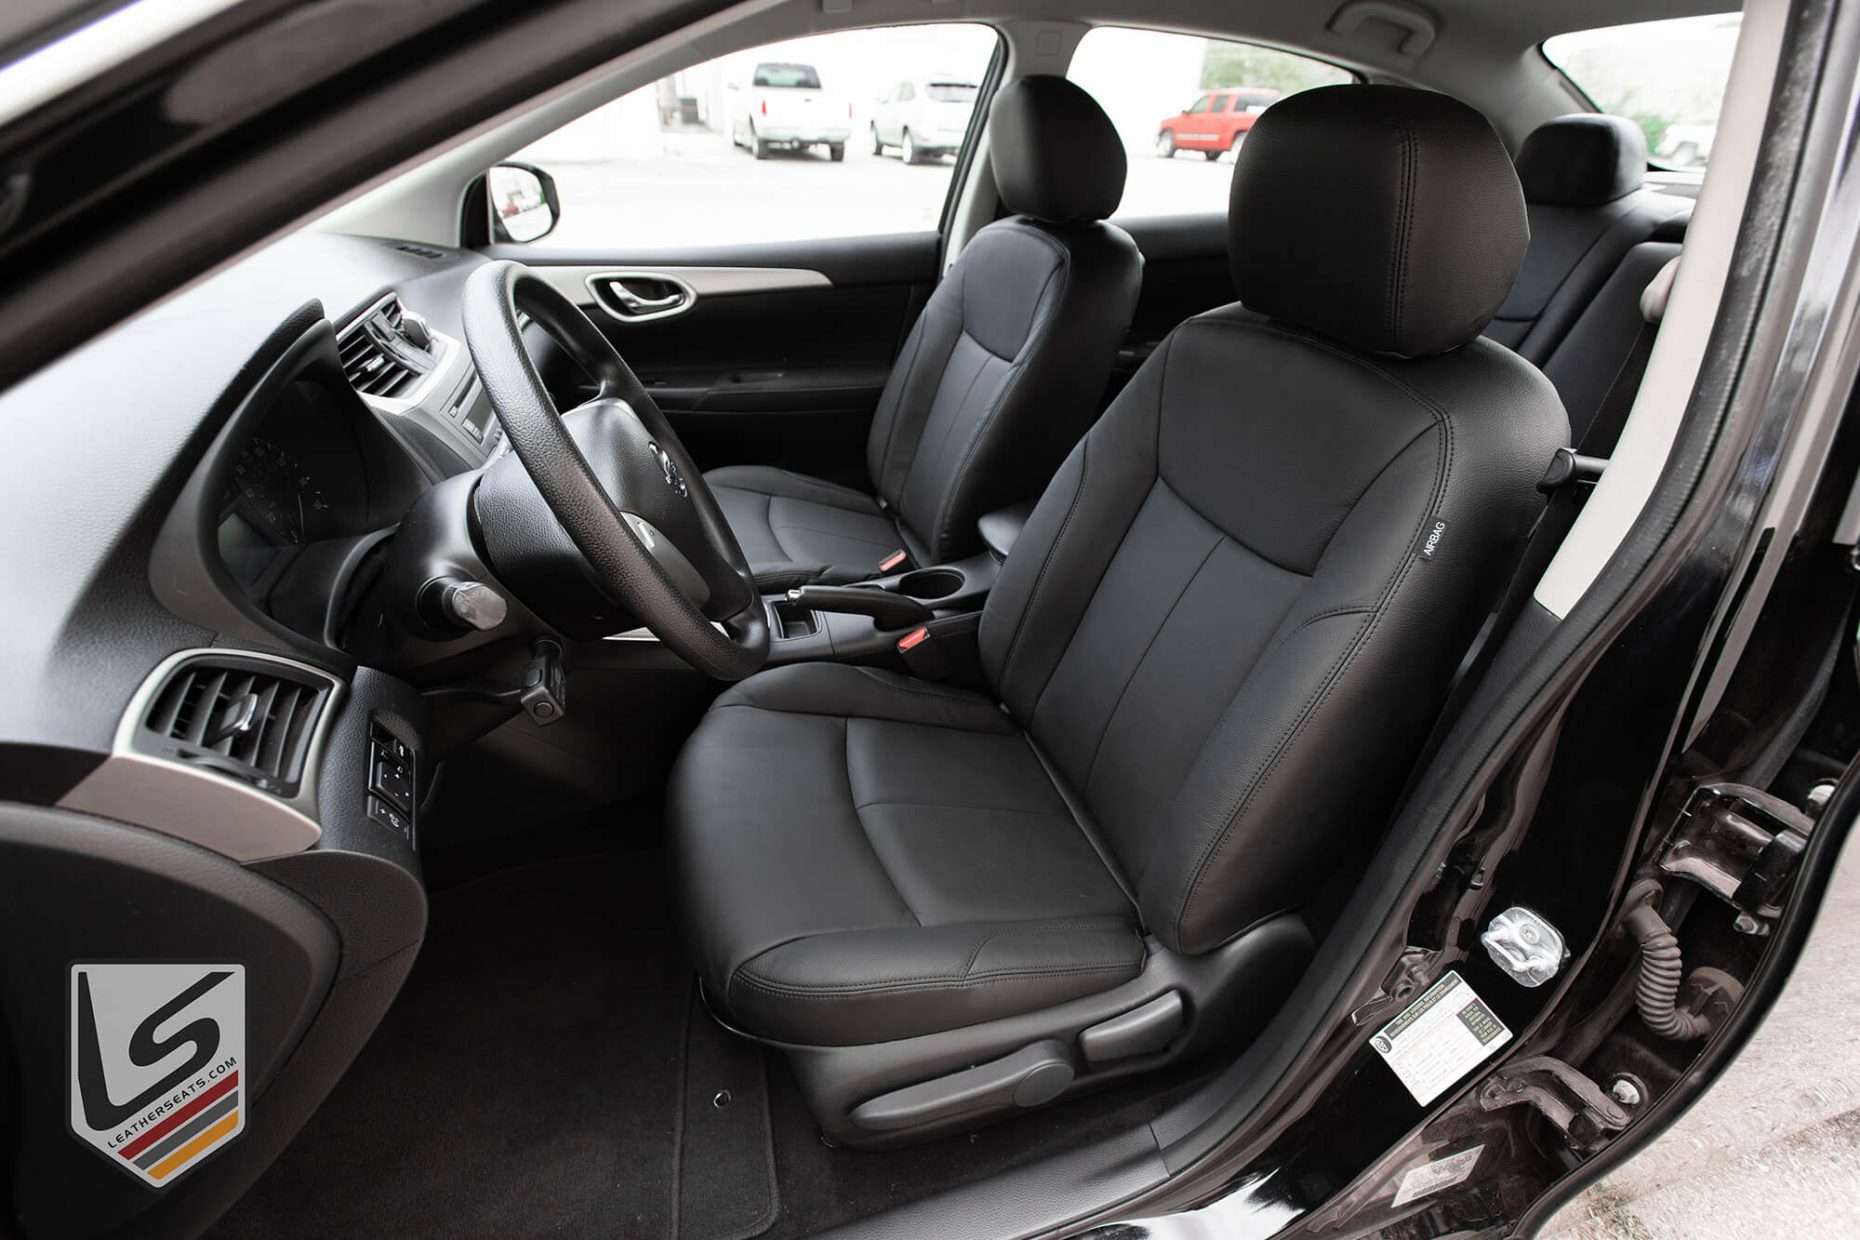 Leatherseats.com custom Black leather seats for Nissan Sentra